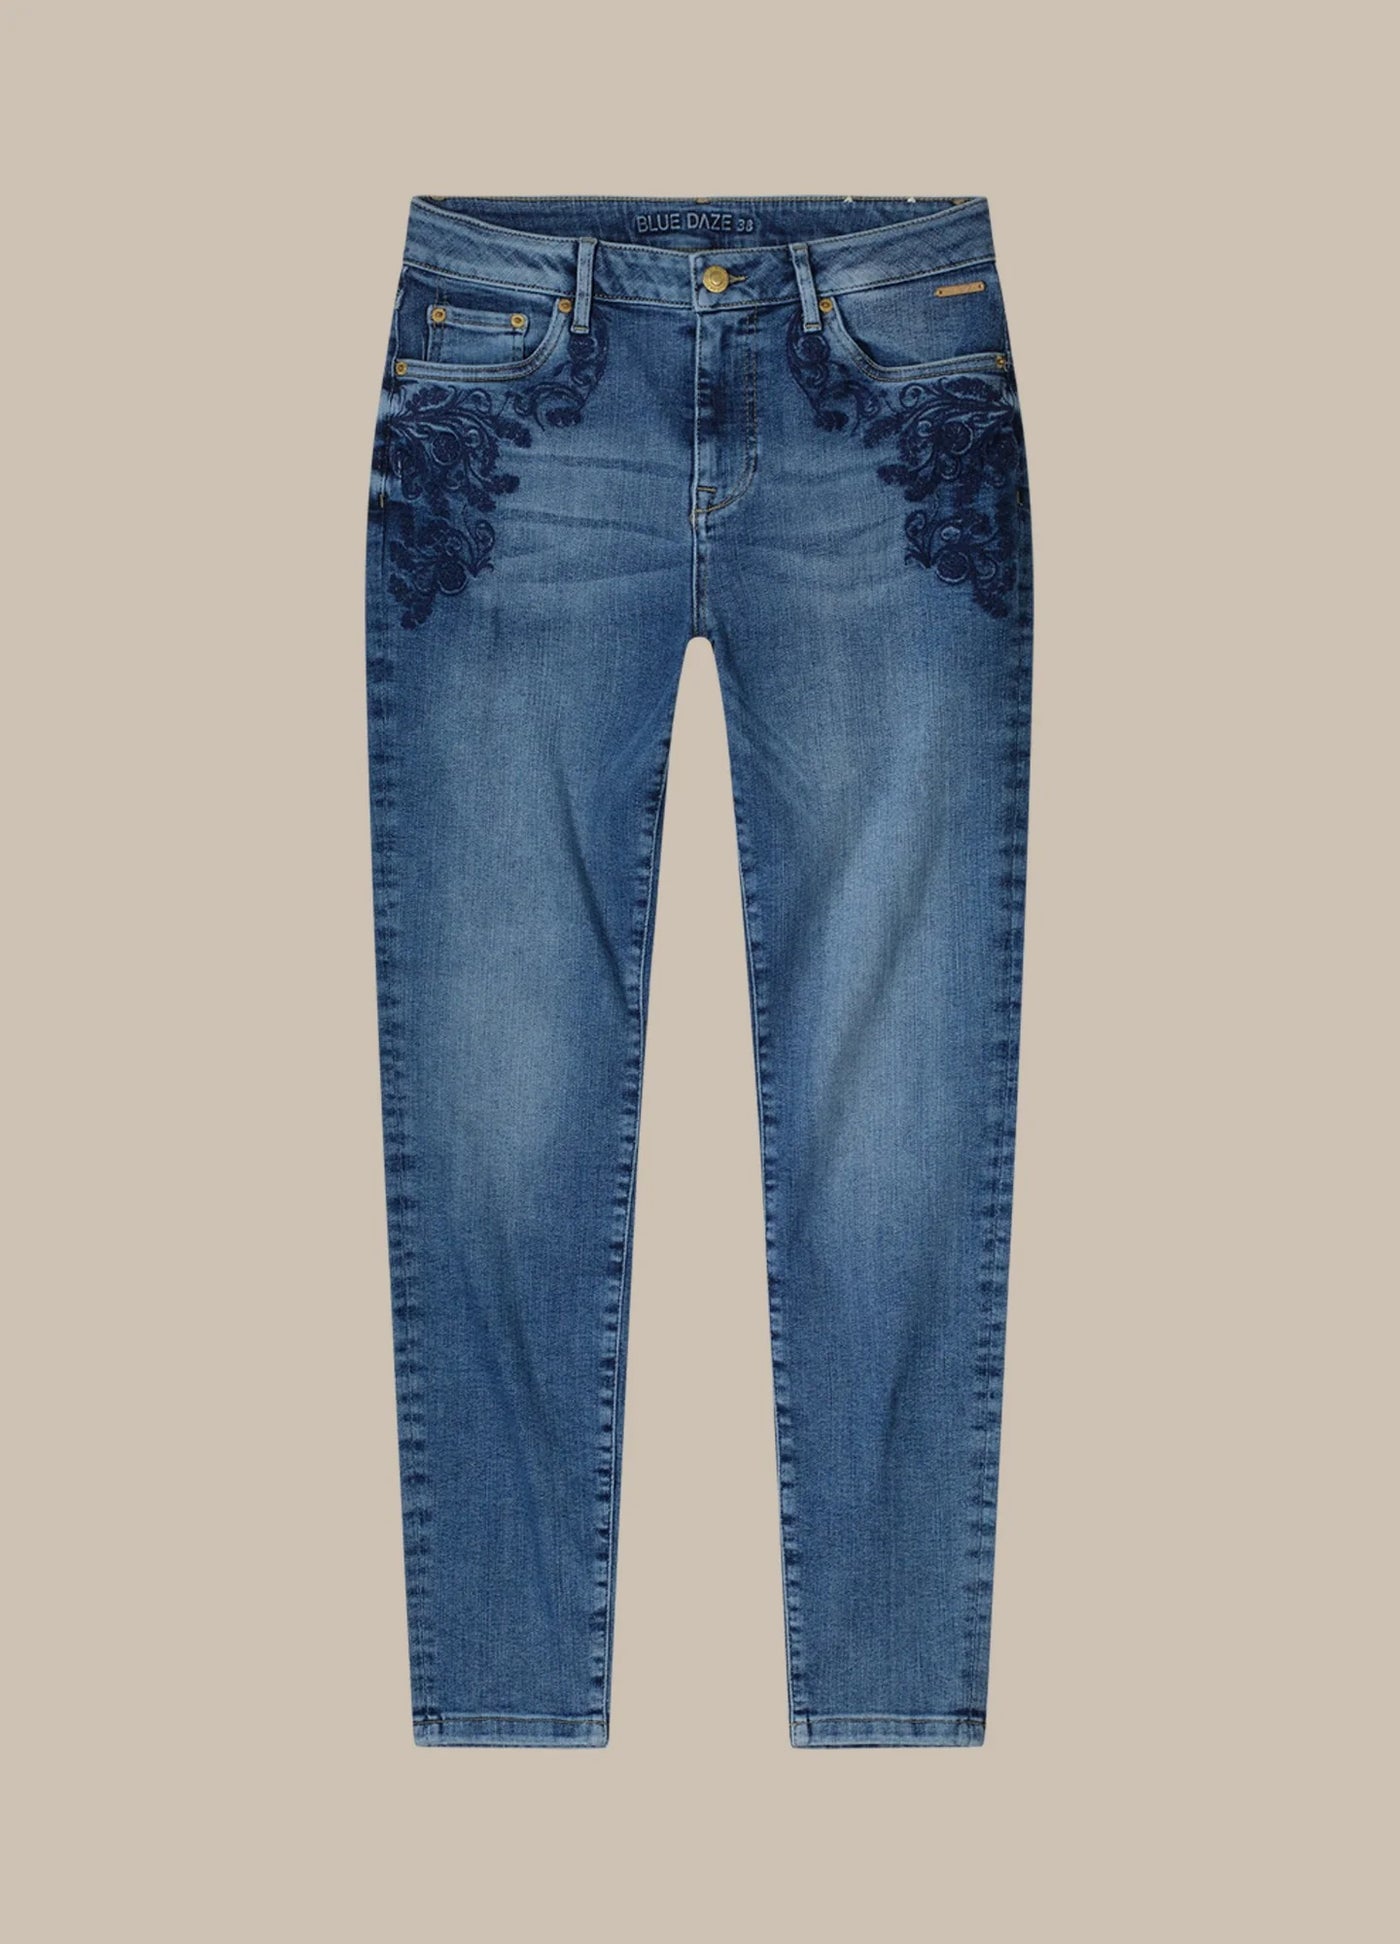 Flower jeans